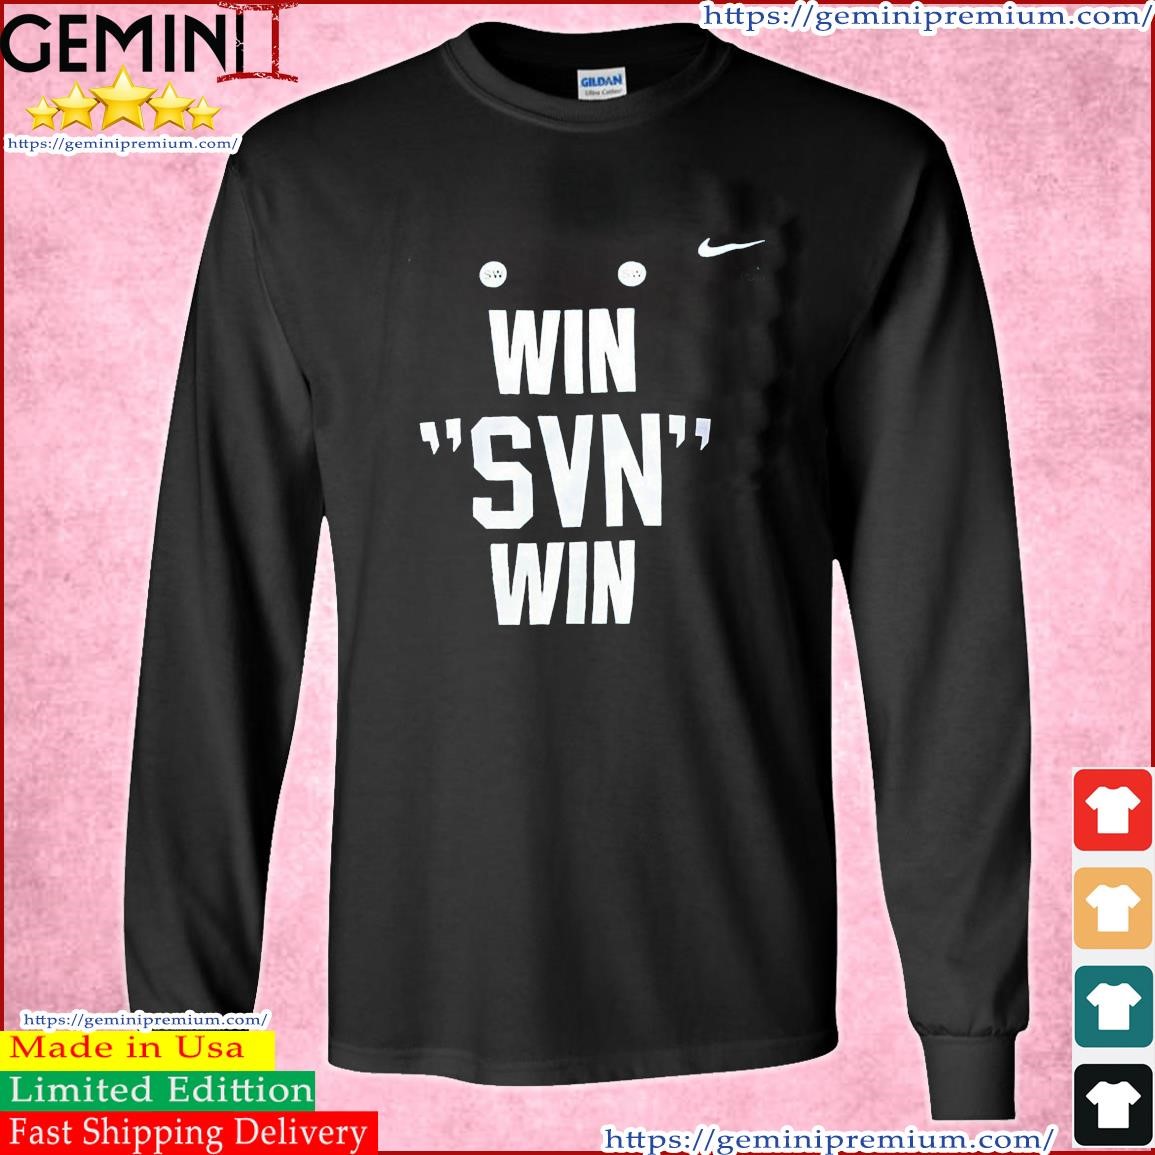 Penn State Nittany Lions Wrestling Nike Win SVN Win Shirt Long Sleeve Tee.jpg